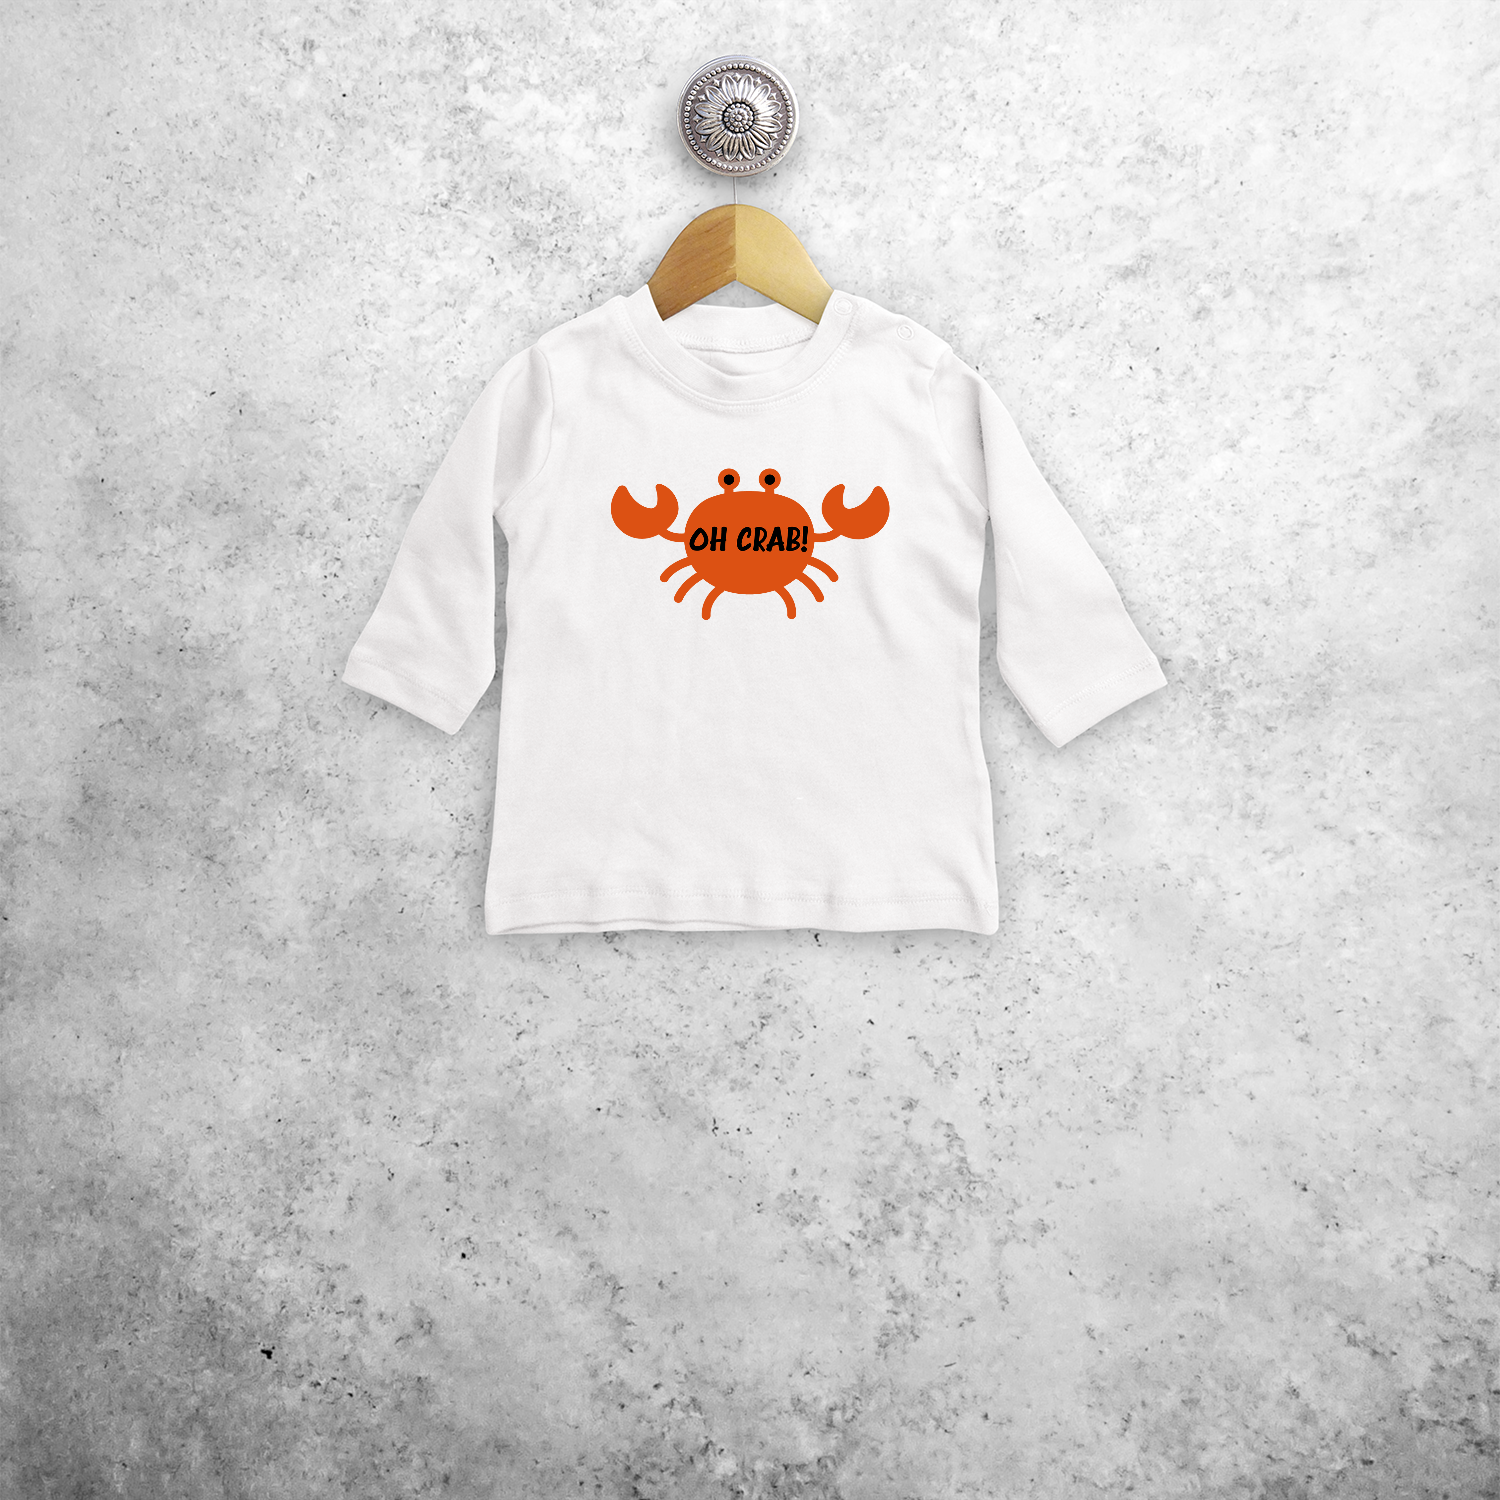 'Oh crab!' baby longsleeve shirt